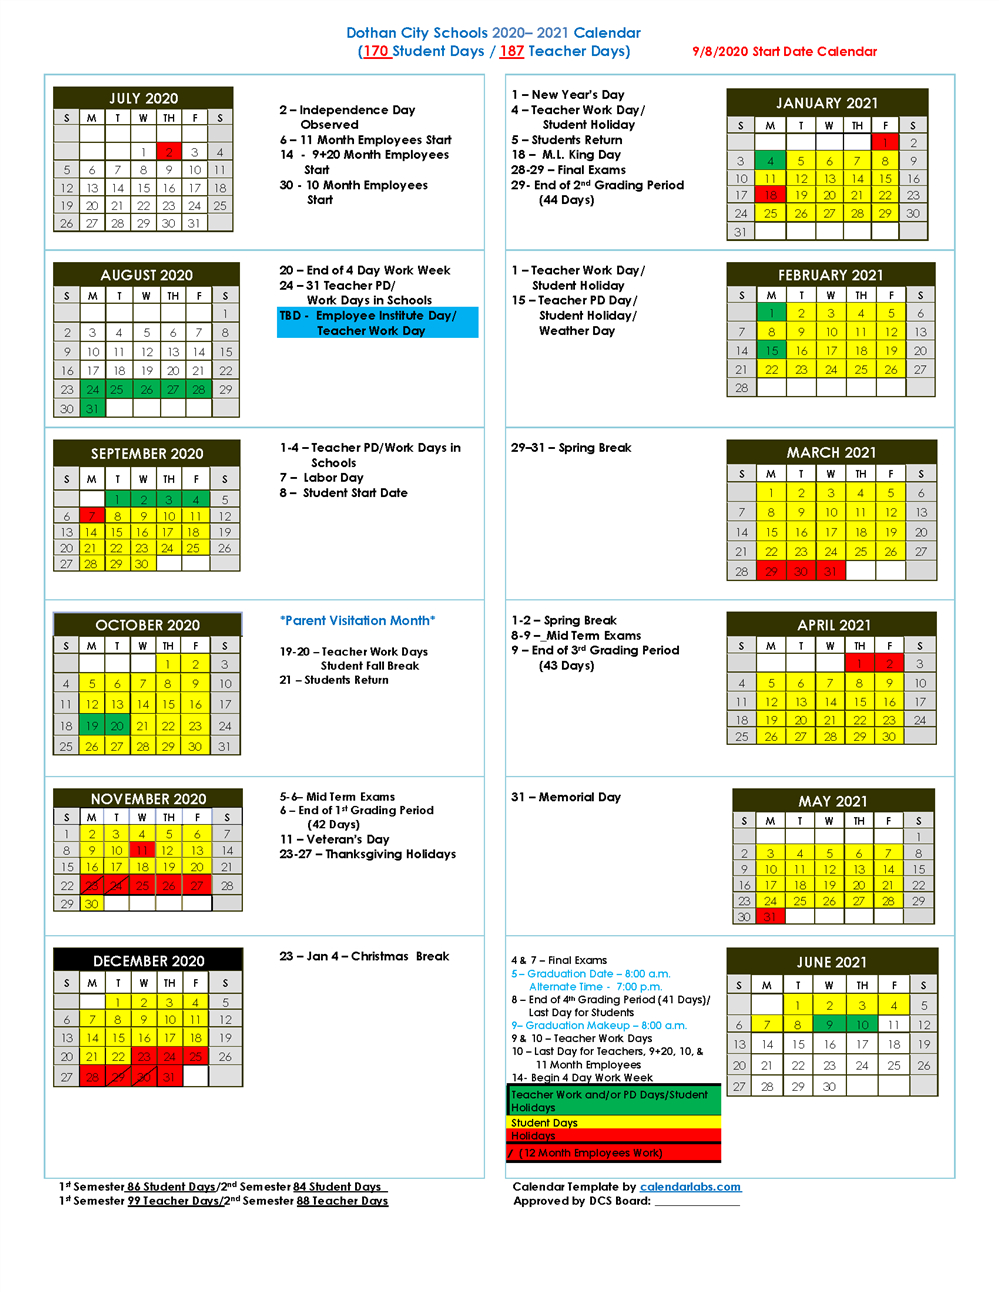 Dothan City Schools Calendar 2021 2022 | Calendar 2021-Nc State Academic Calendar 2022